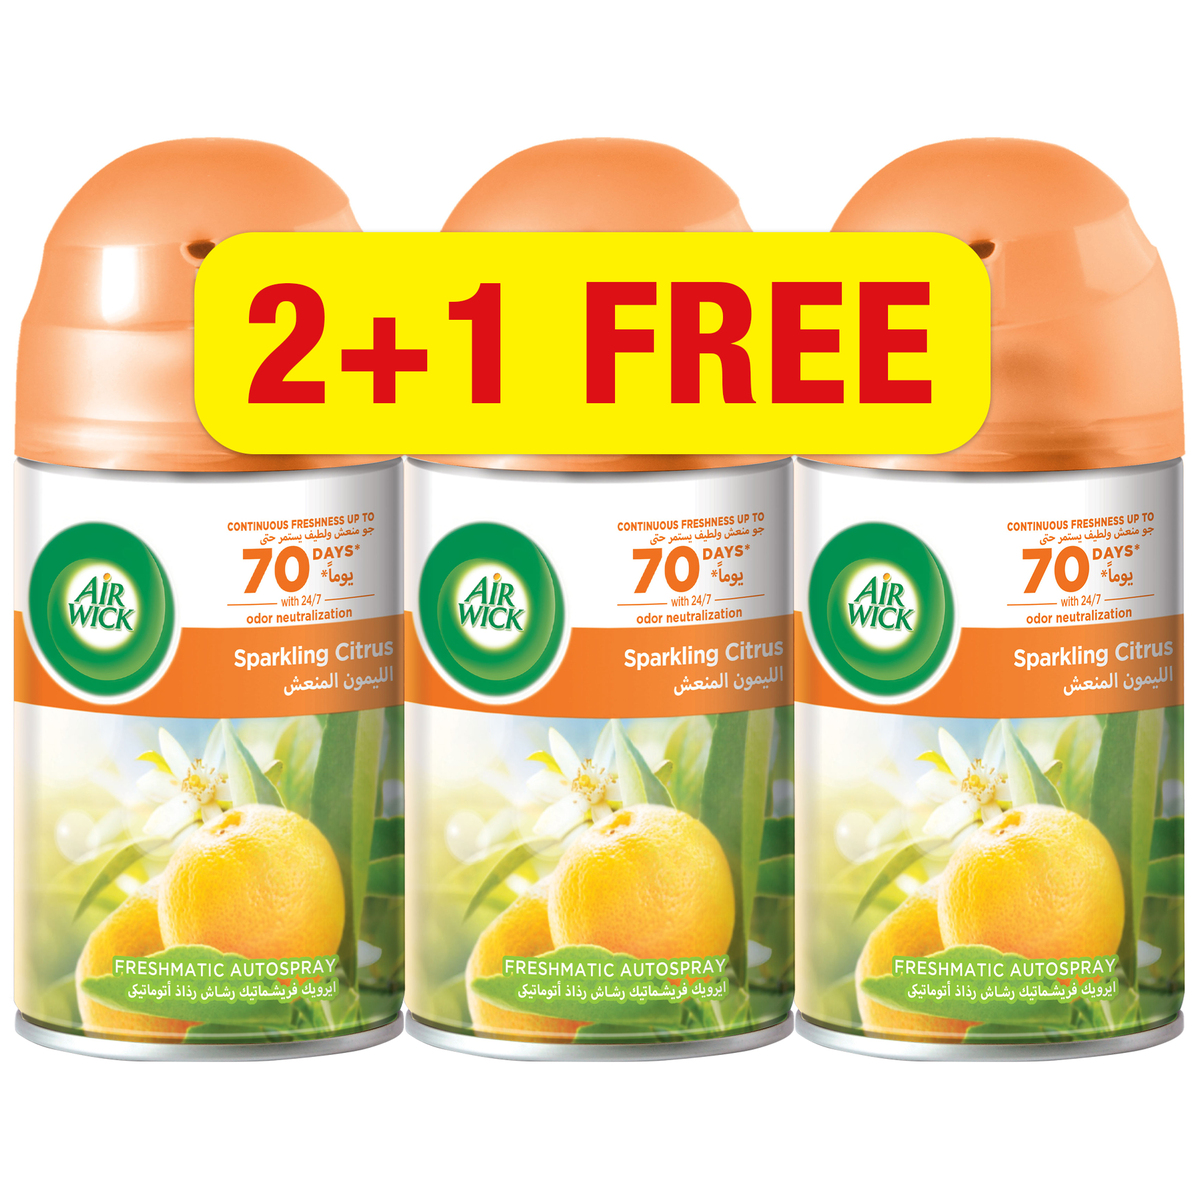 Buy Airwick Air Freshener Freshmatic Refill Sparkling Citrus 3 x 250 ml Online at Best Price | Auto AF Machine Refl | Lulu UAE in UAE